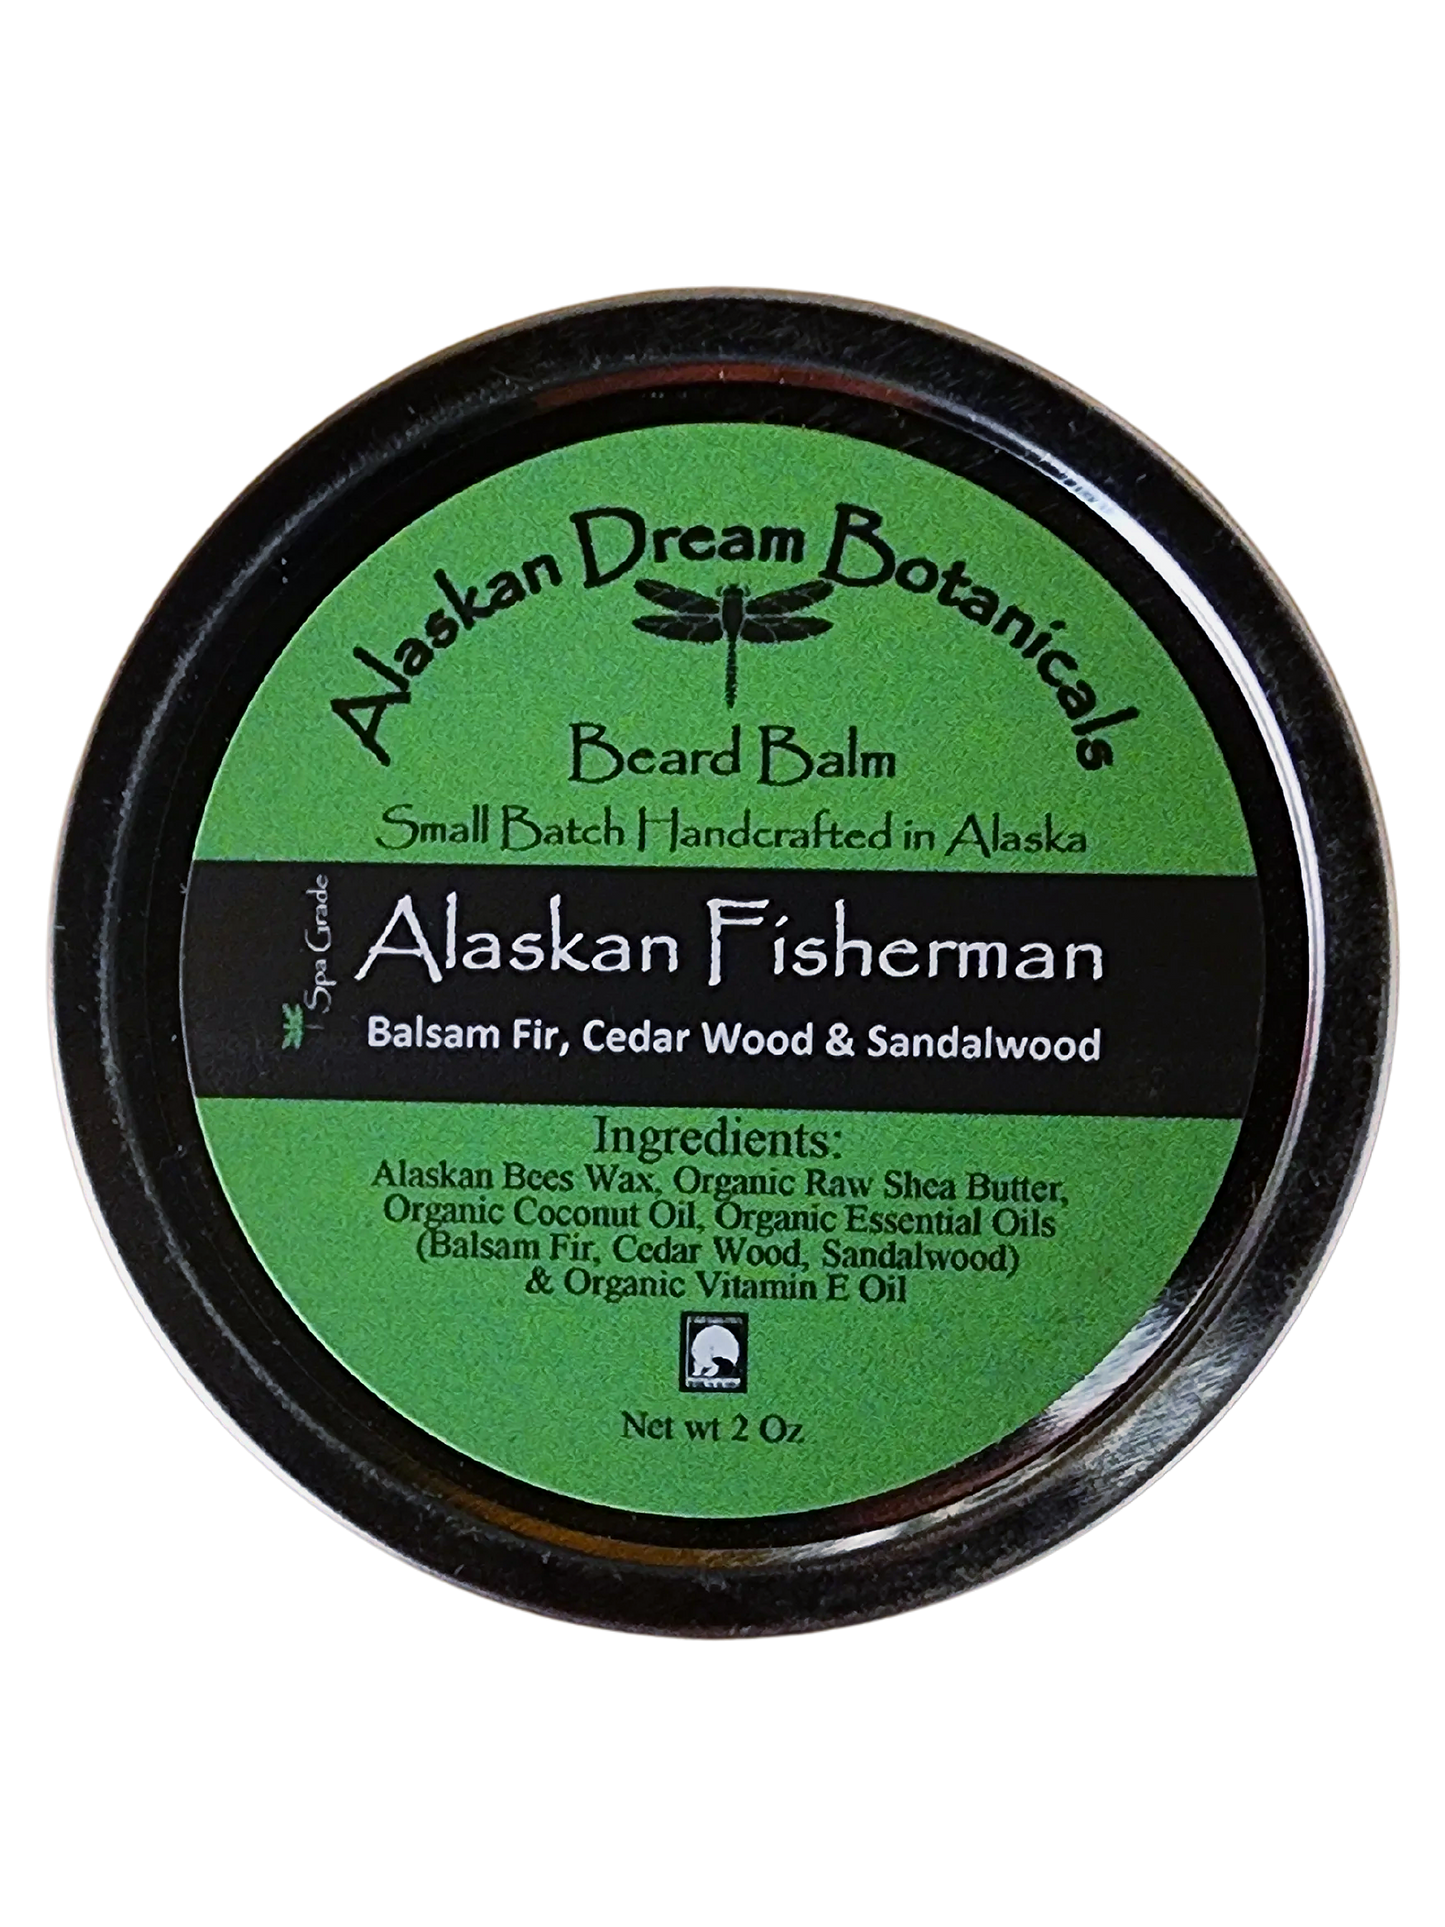 Alaskan Fisherman Spa Grade Beard Balm - Alaskan Dream Botanicals